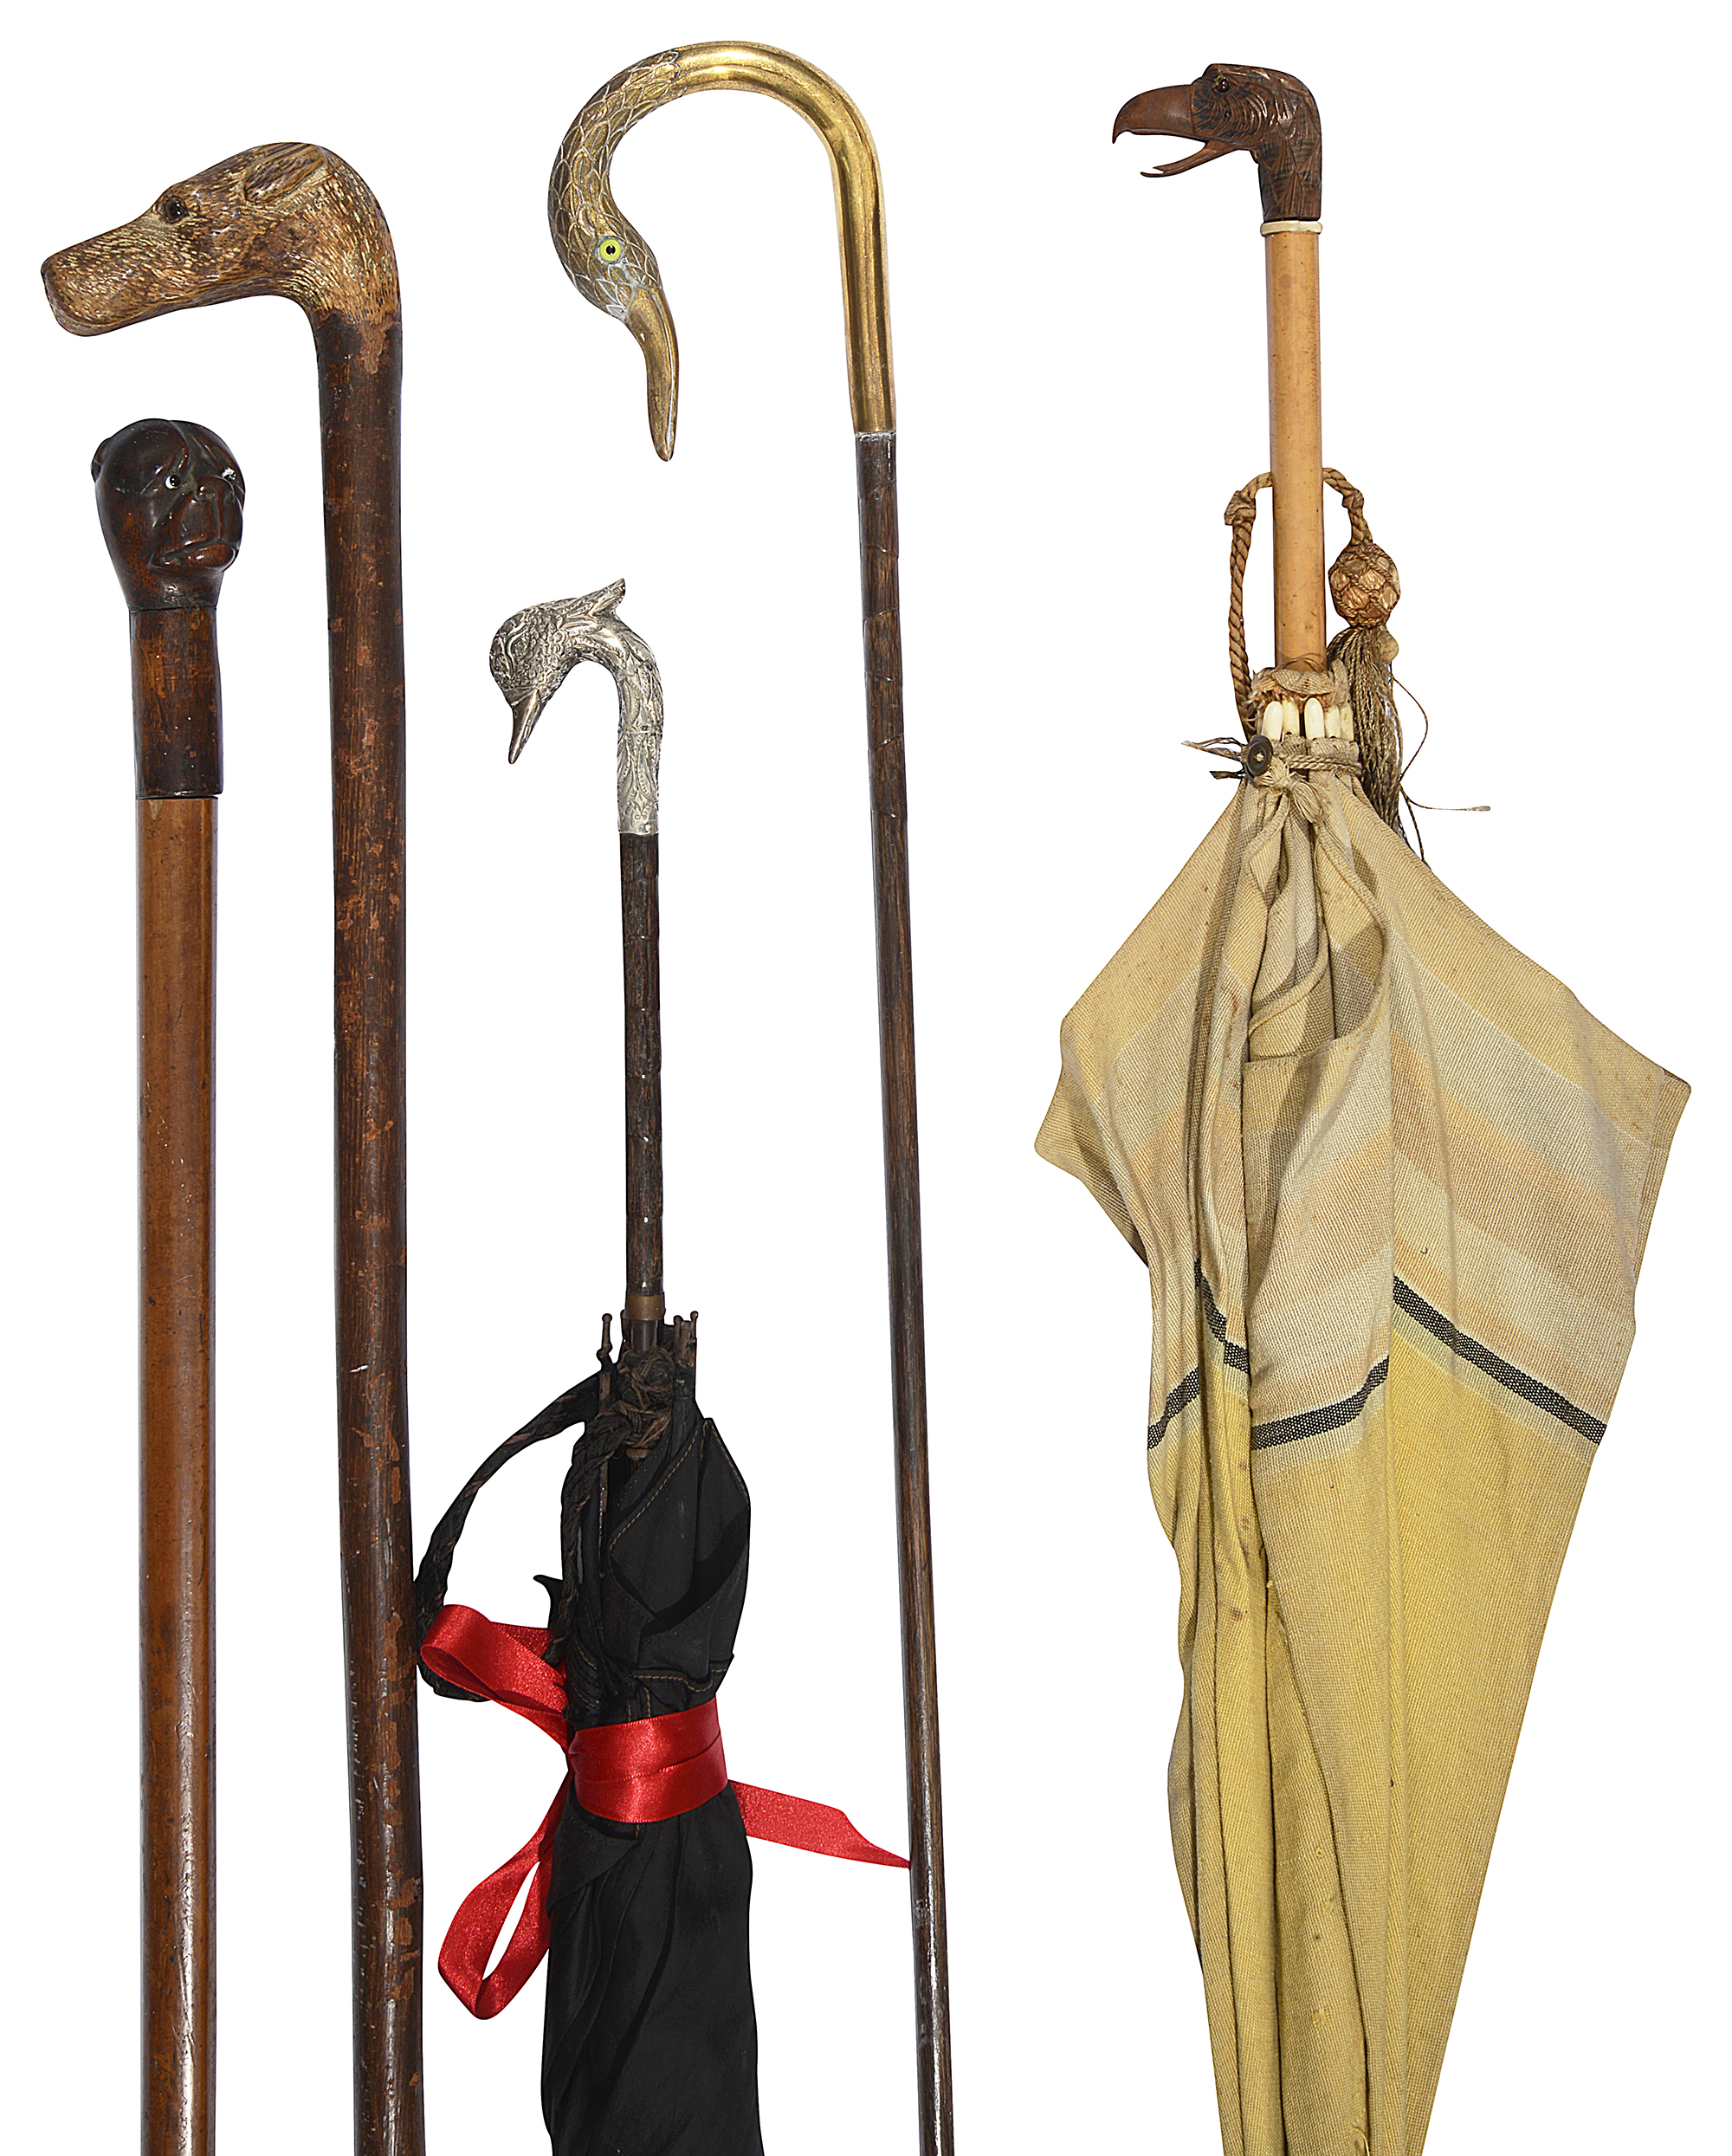 Five late Victorian / Edwardian novelty walking sticks and parasols